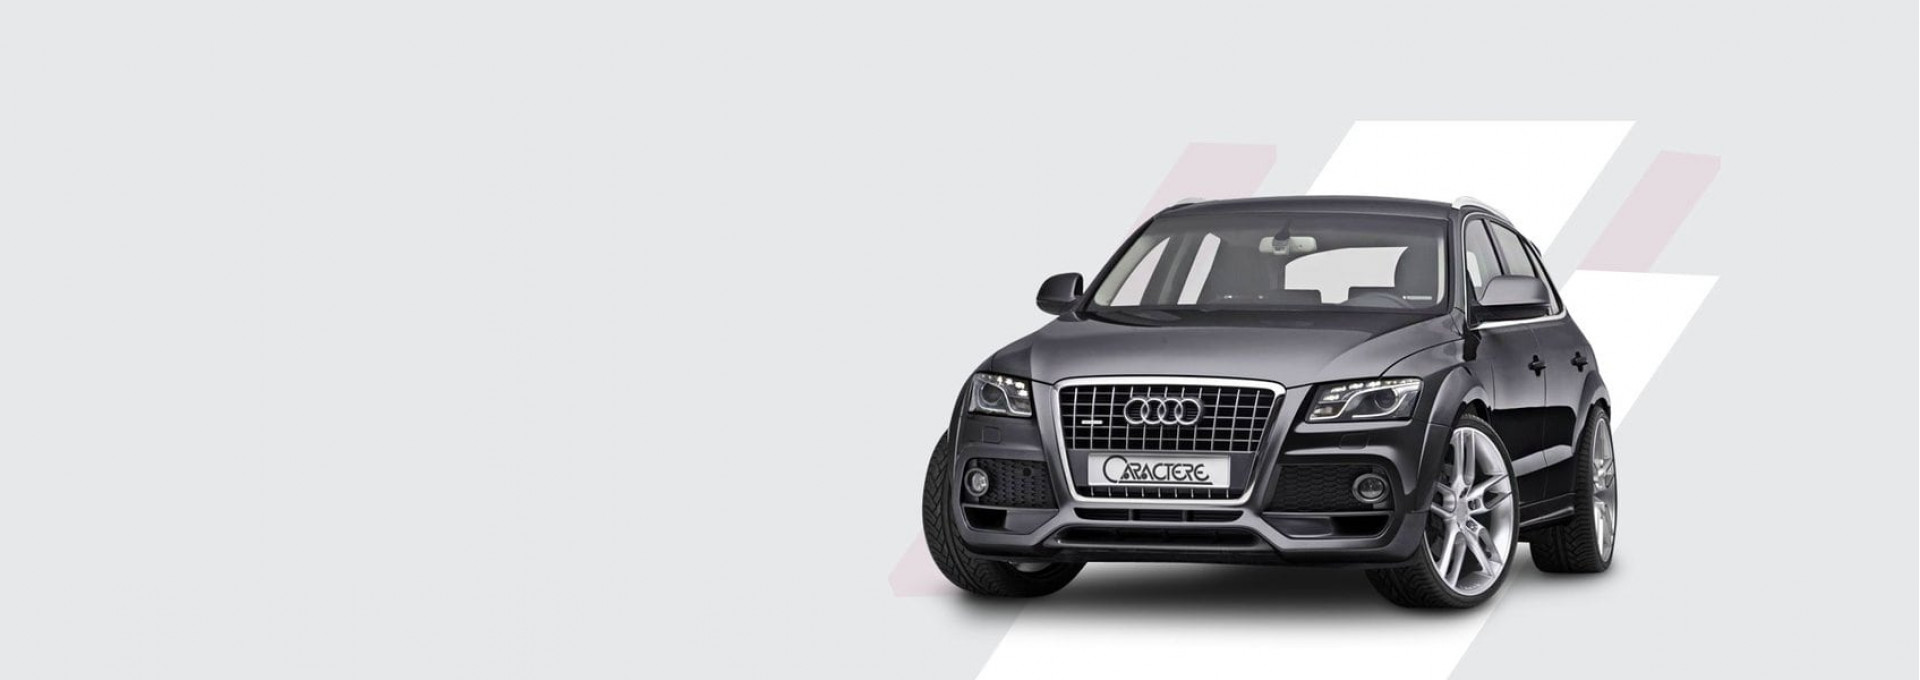 The Audi Q5